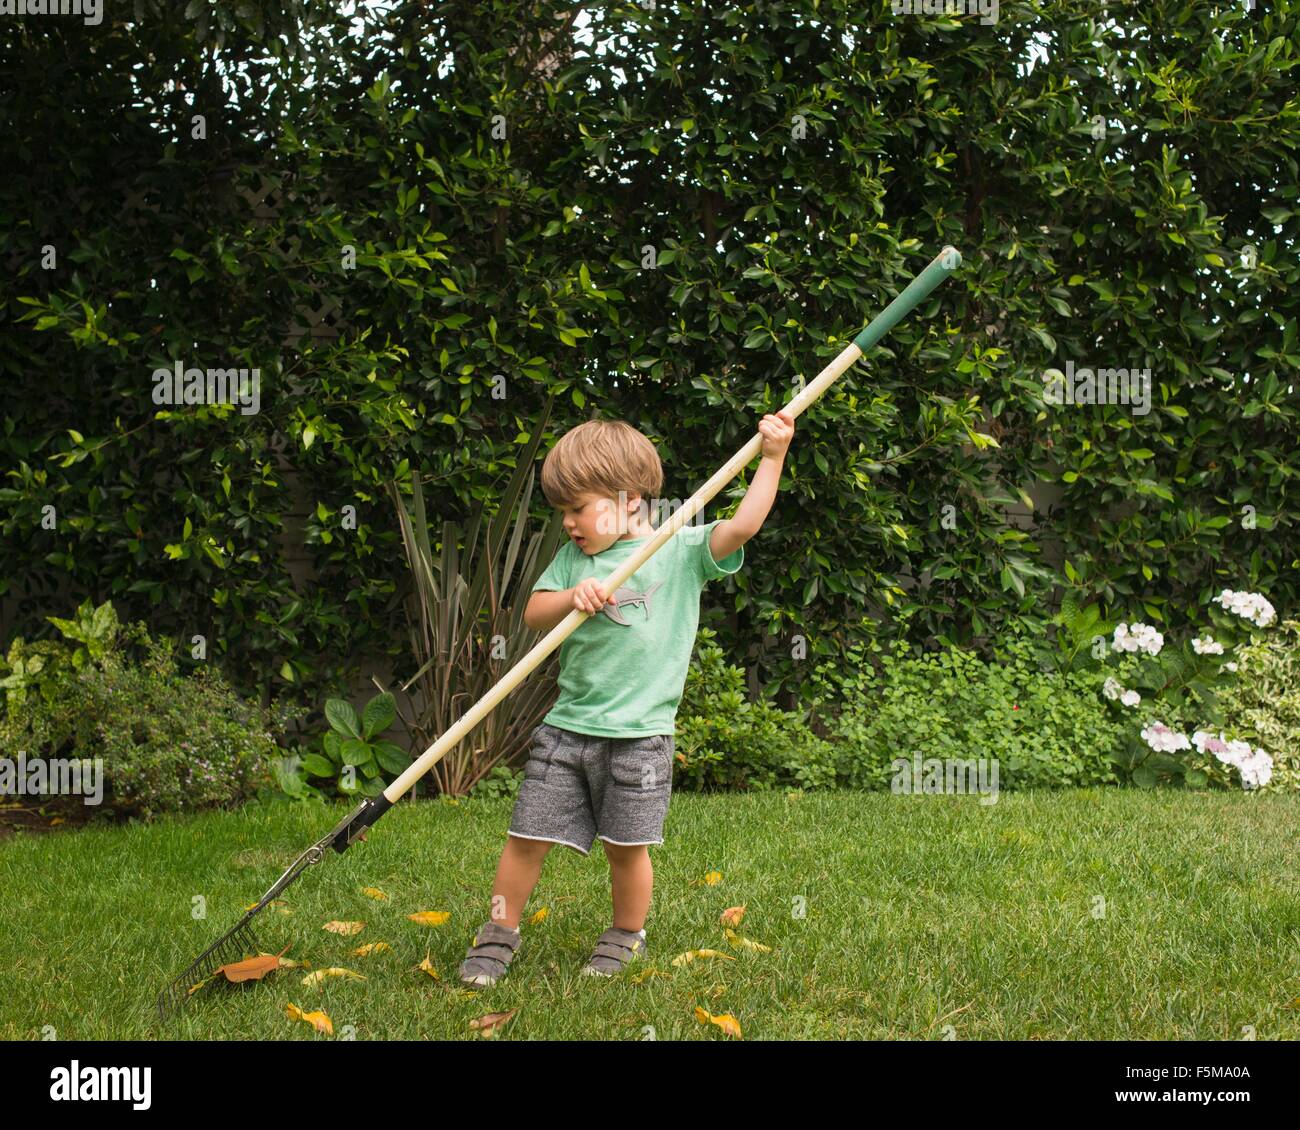 Young boy raking leaves in garden Stock Photo